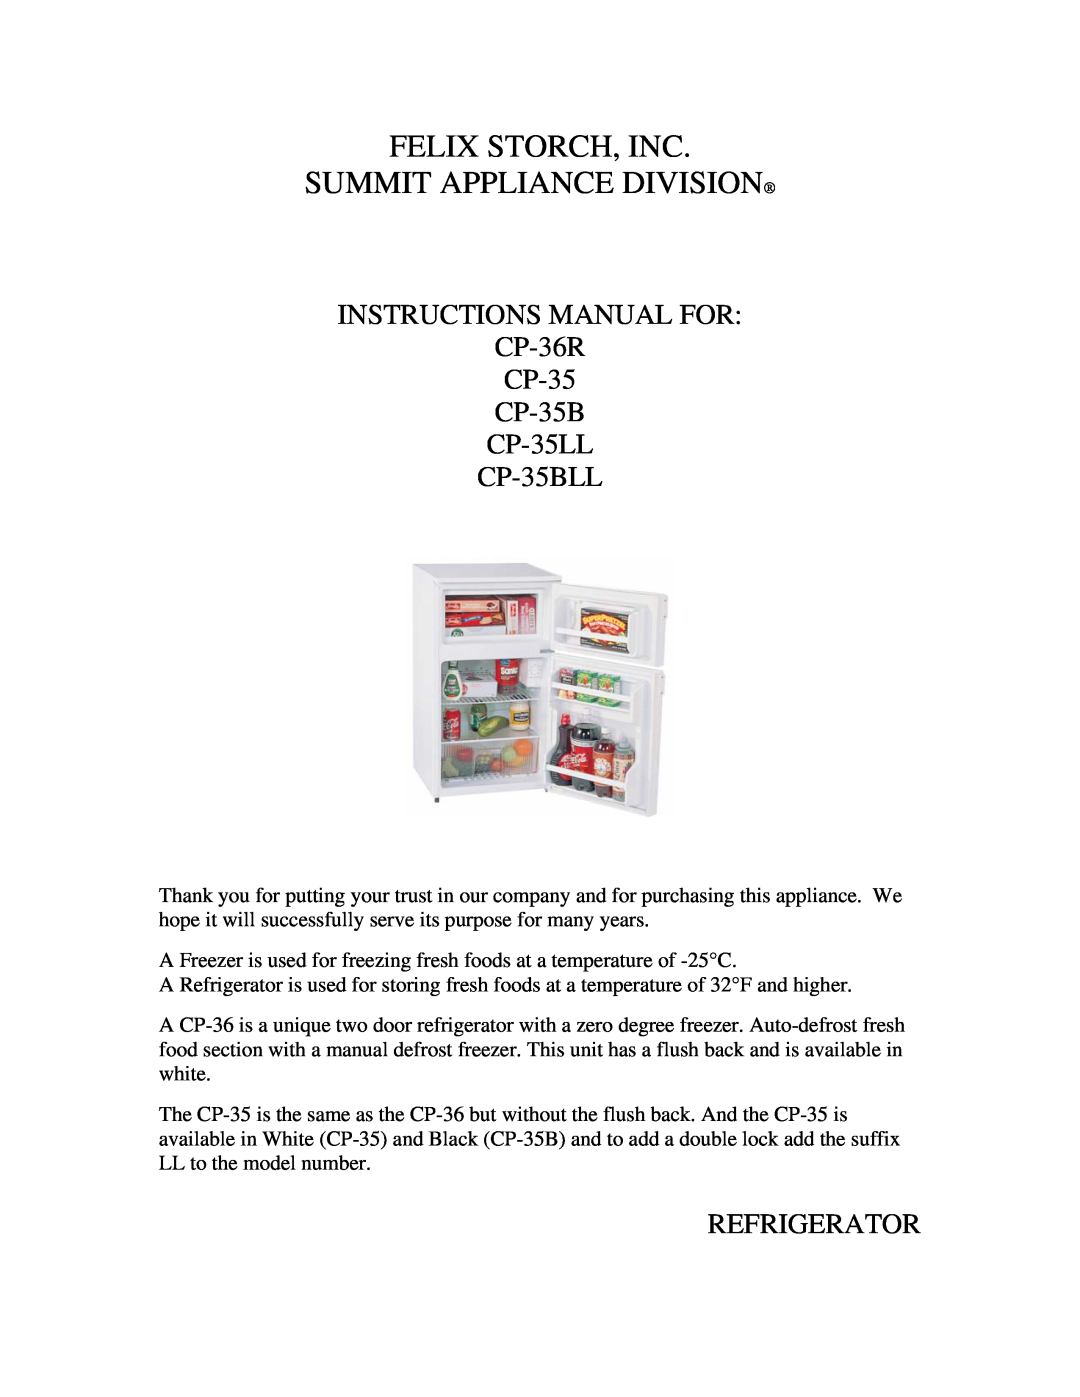 Summit manual INSTRUCTIONS MANUAL FOR CP-36R CP-35 CP-35B CP-35LL CP-35BLL, Refrigerator 